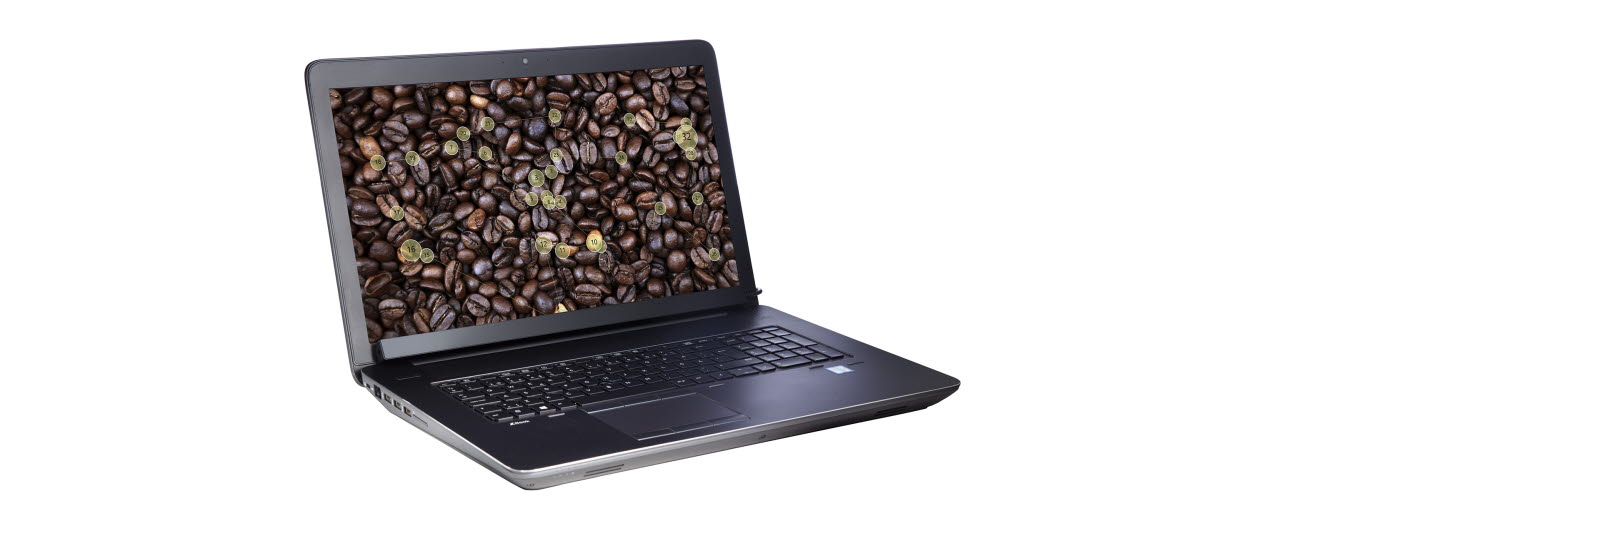 Tobii Pro Fusion on a laptop